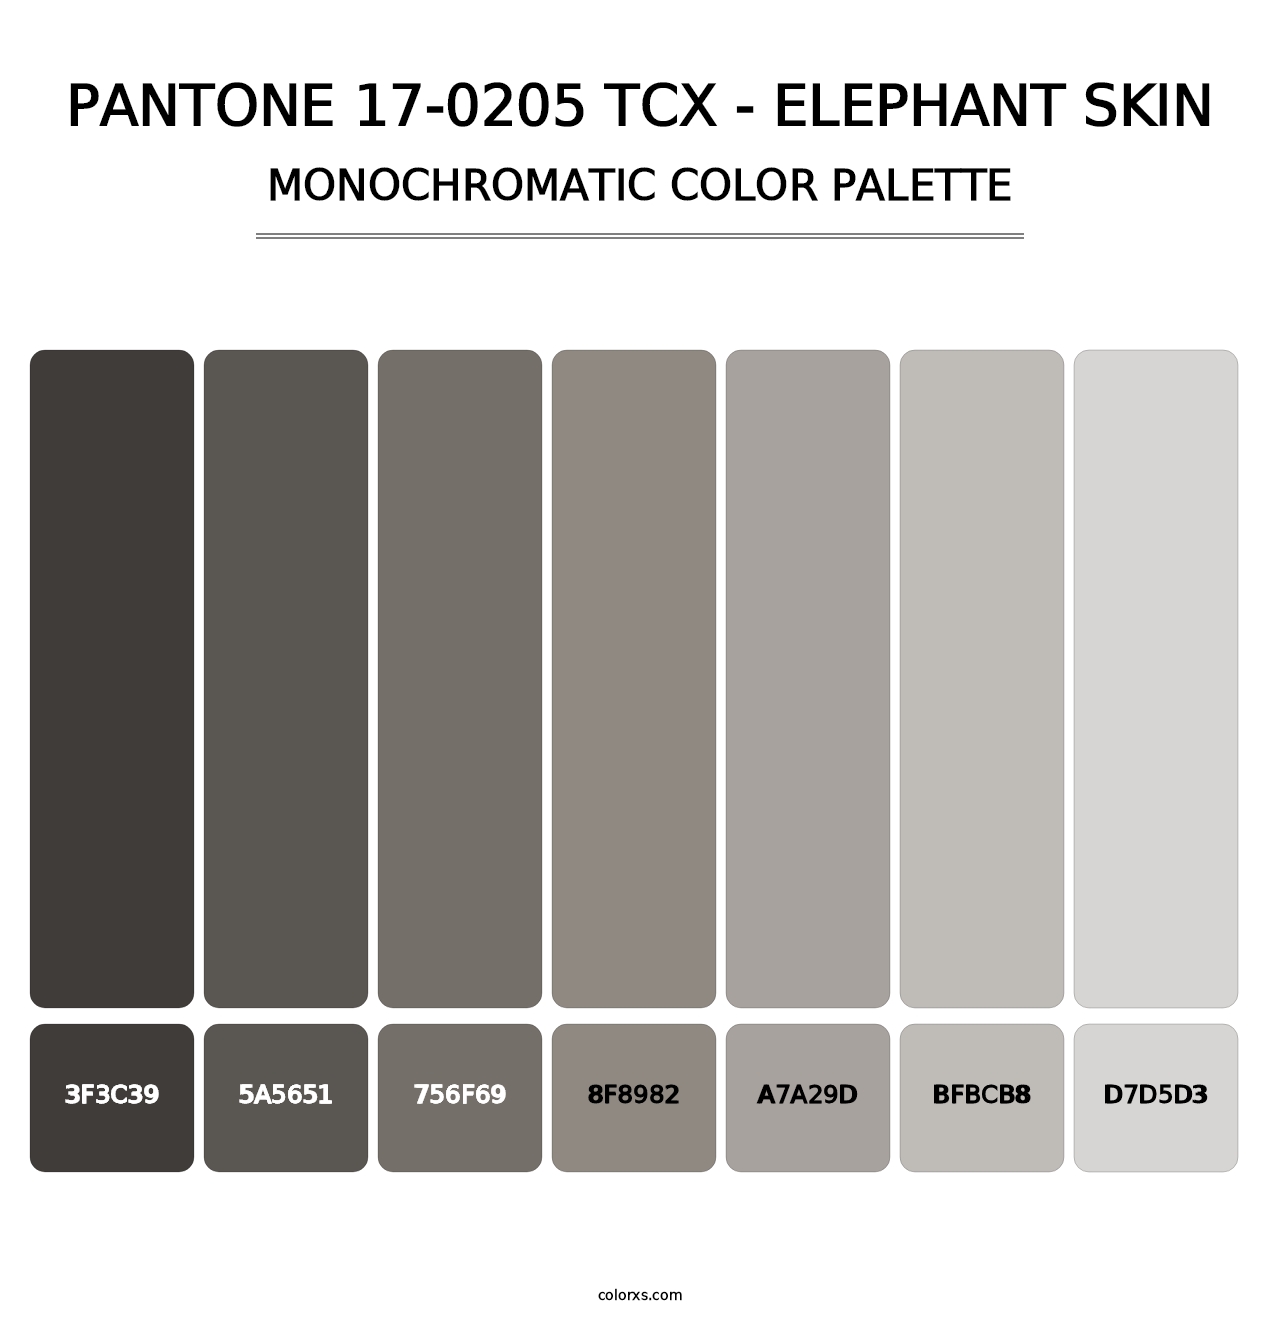 PANTONE 17-0205 TCX - Elephant Skin - Monochromatic Color Palette